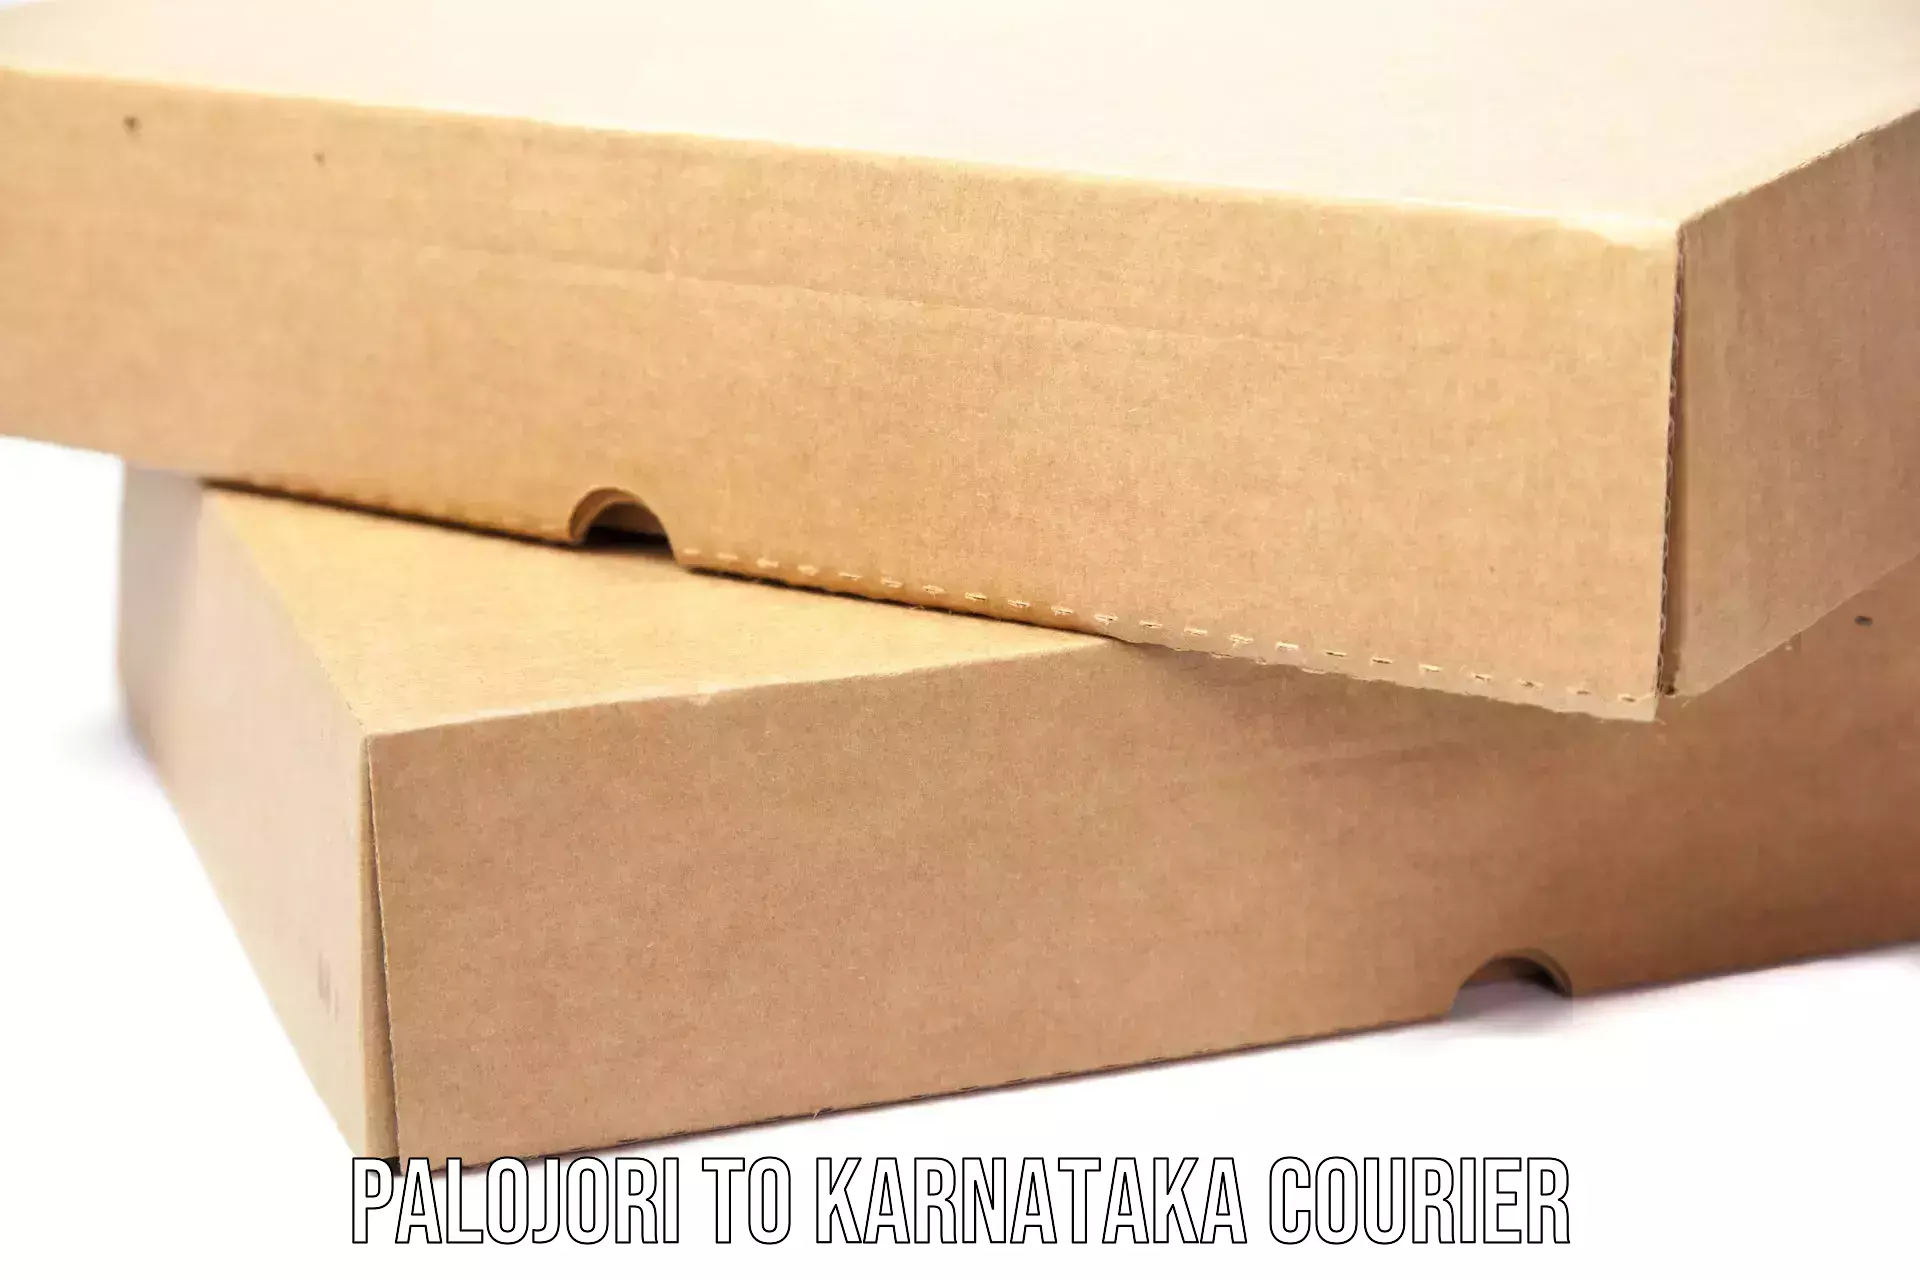 Express courier capabilities in Palojori to Karnataka